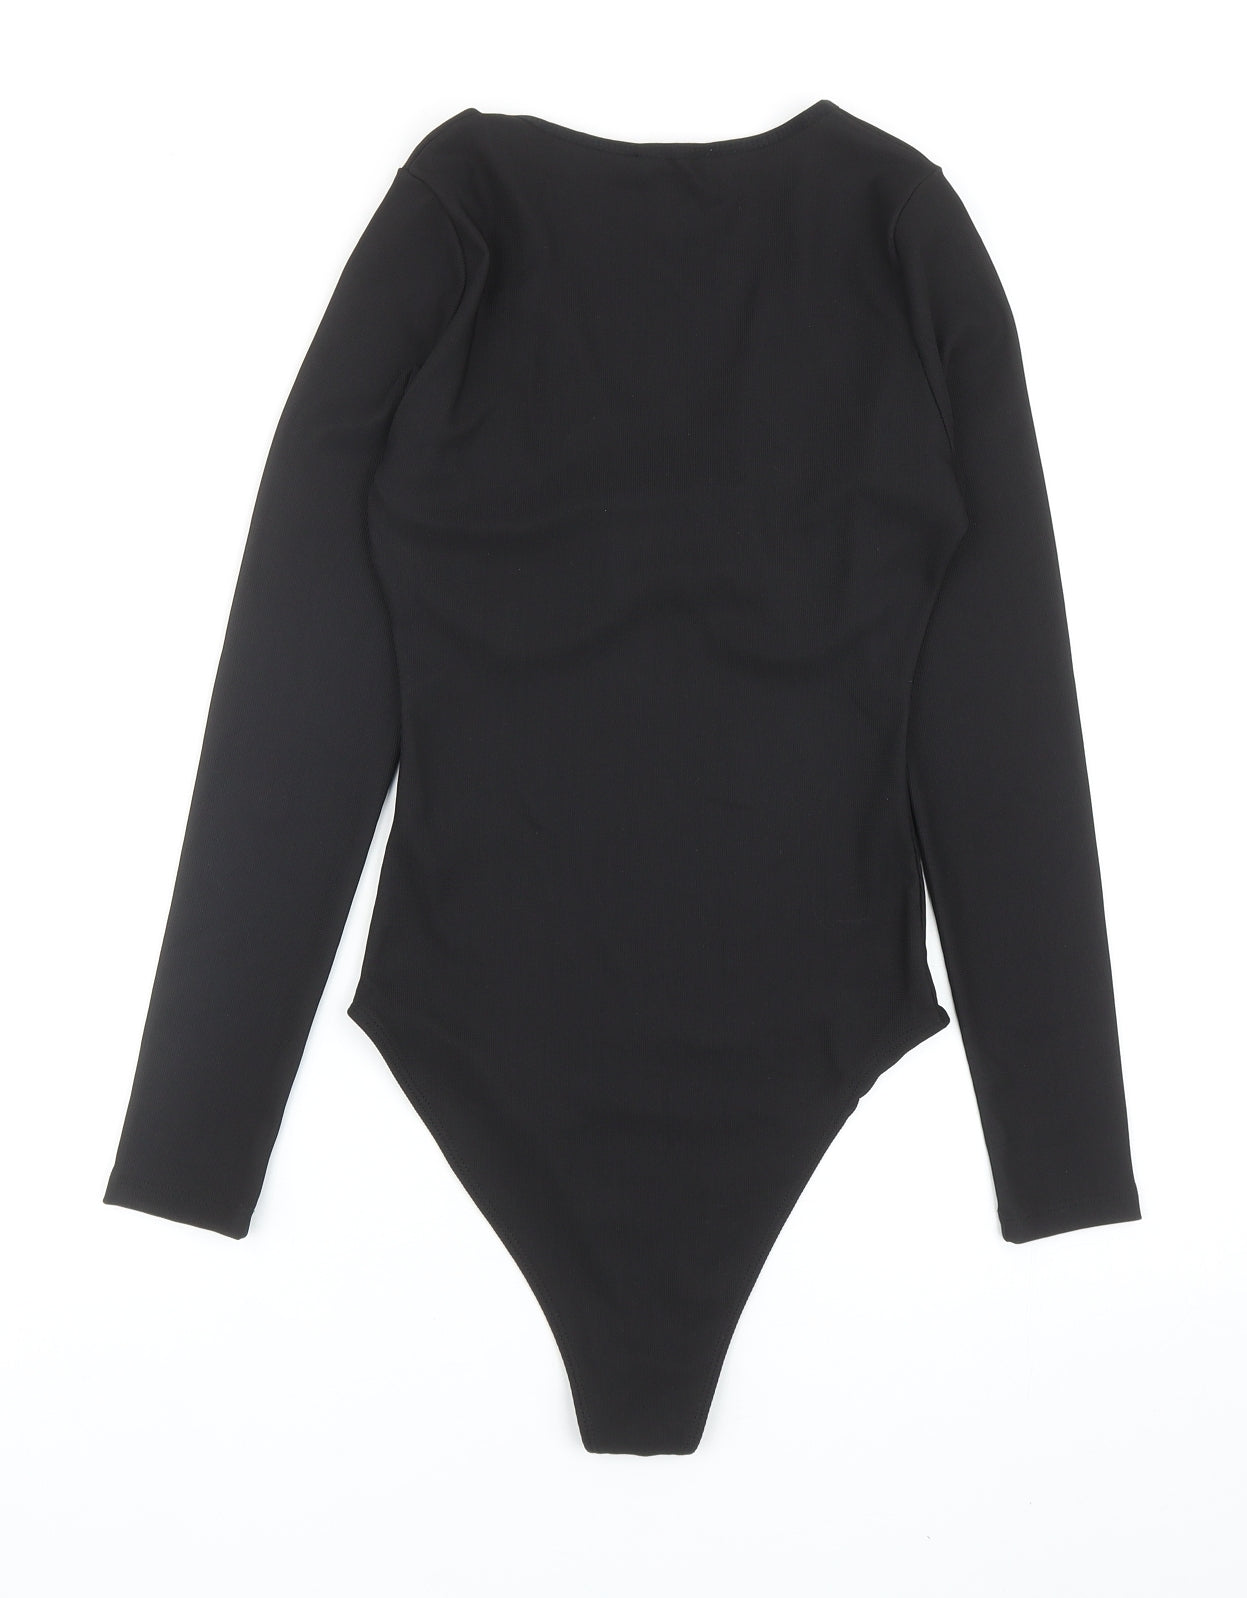 Primark Womens Black Polyester Bodysuit One-Piece Size XS Snap